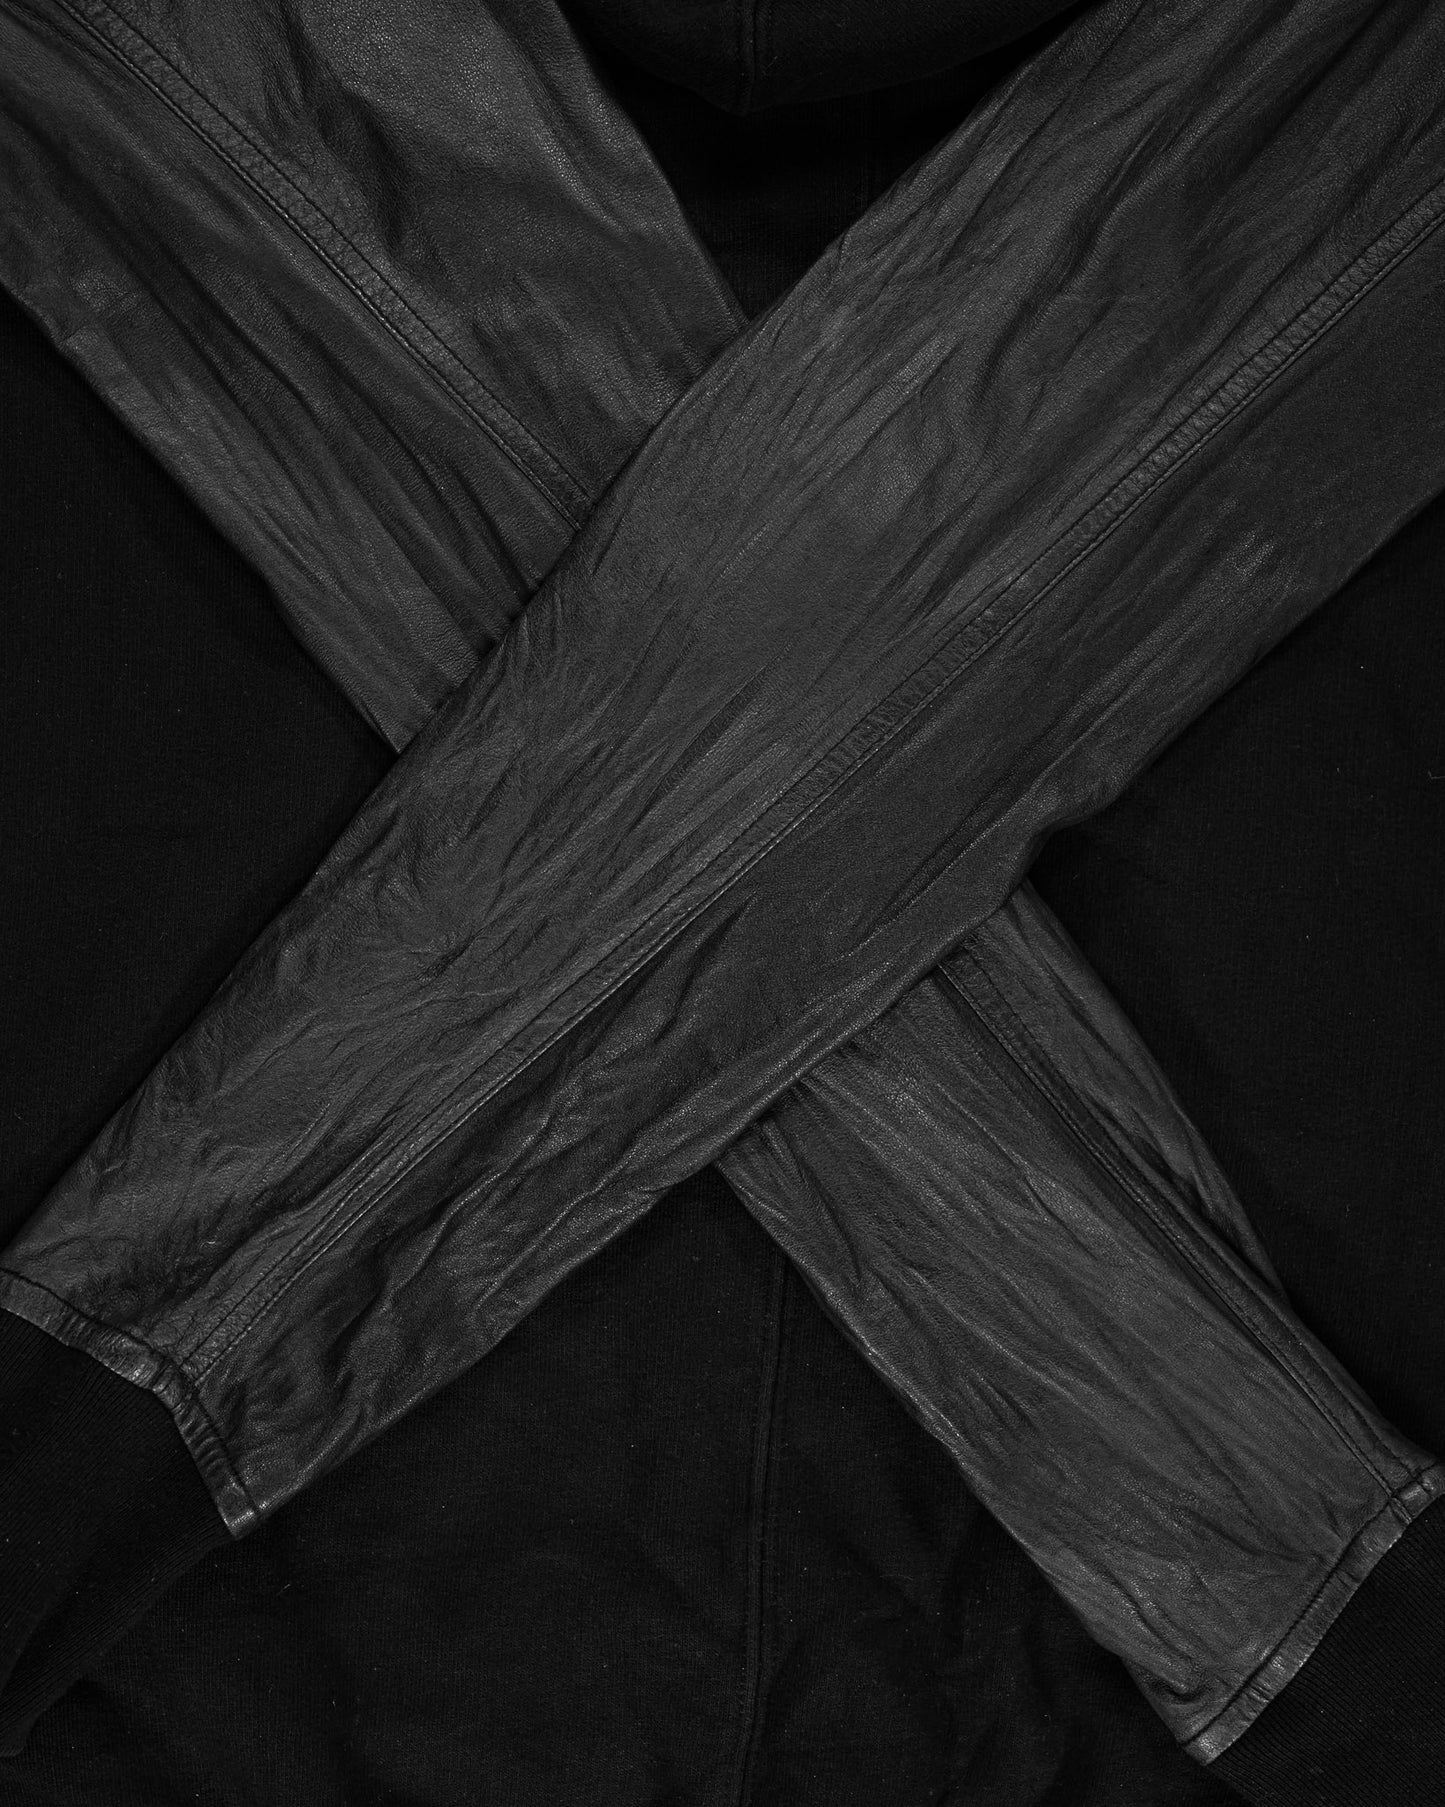 Rick Owens Leather Sleeve Gimp Hoodie - SS15 “Faun”